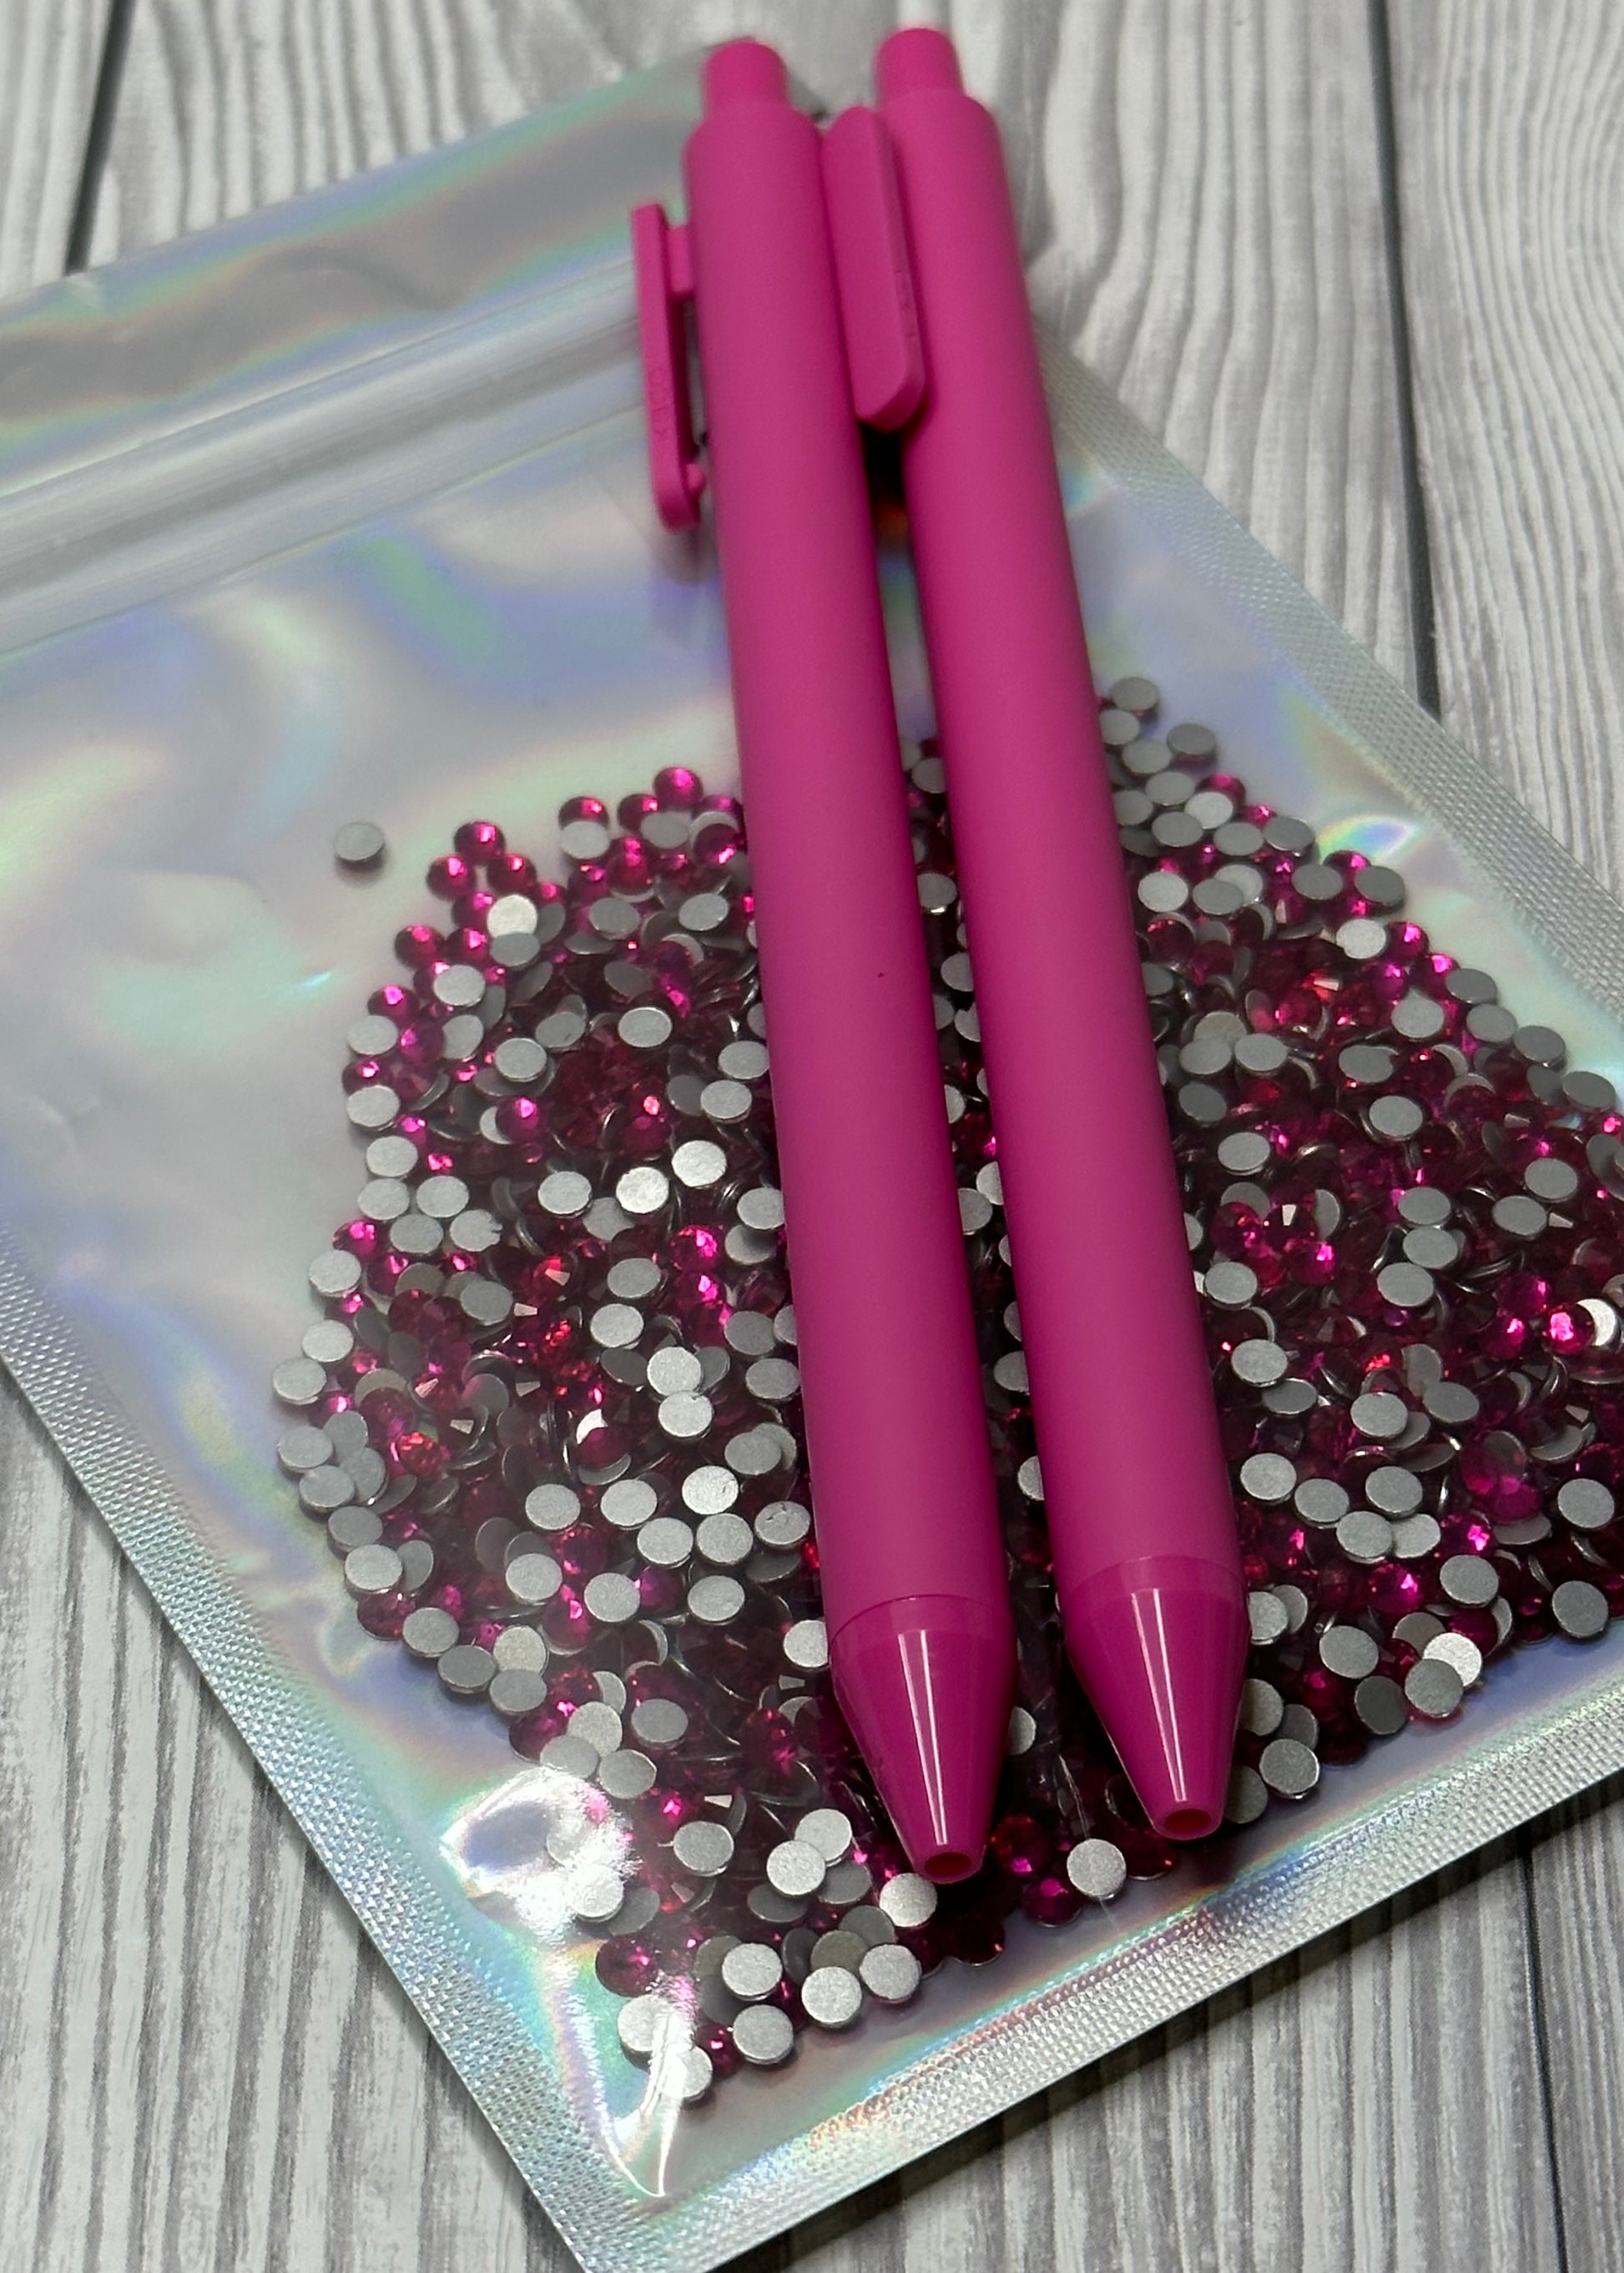 Mini Mix - Single Glass SS12 Rhinestone Mix STAINLESS STEEL Pen kit –  SpRkle Designs